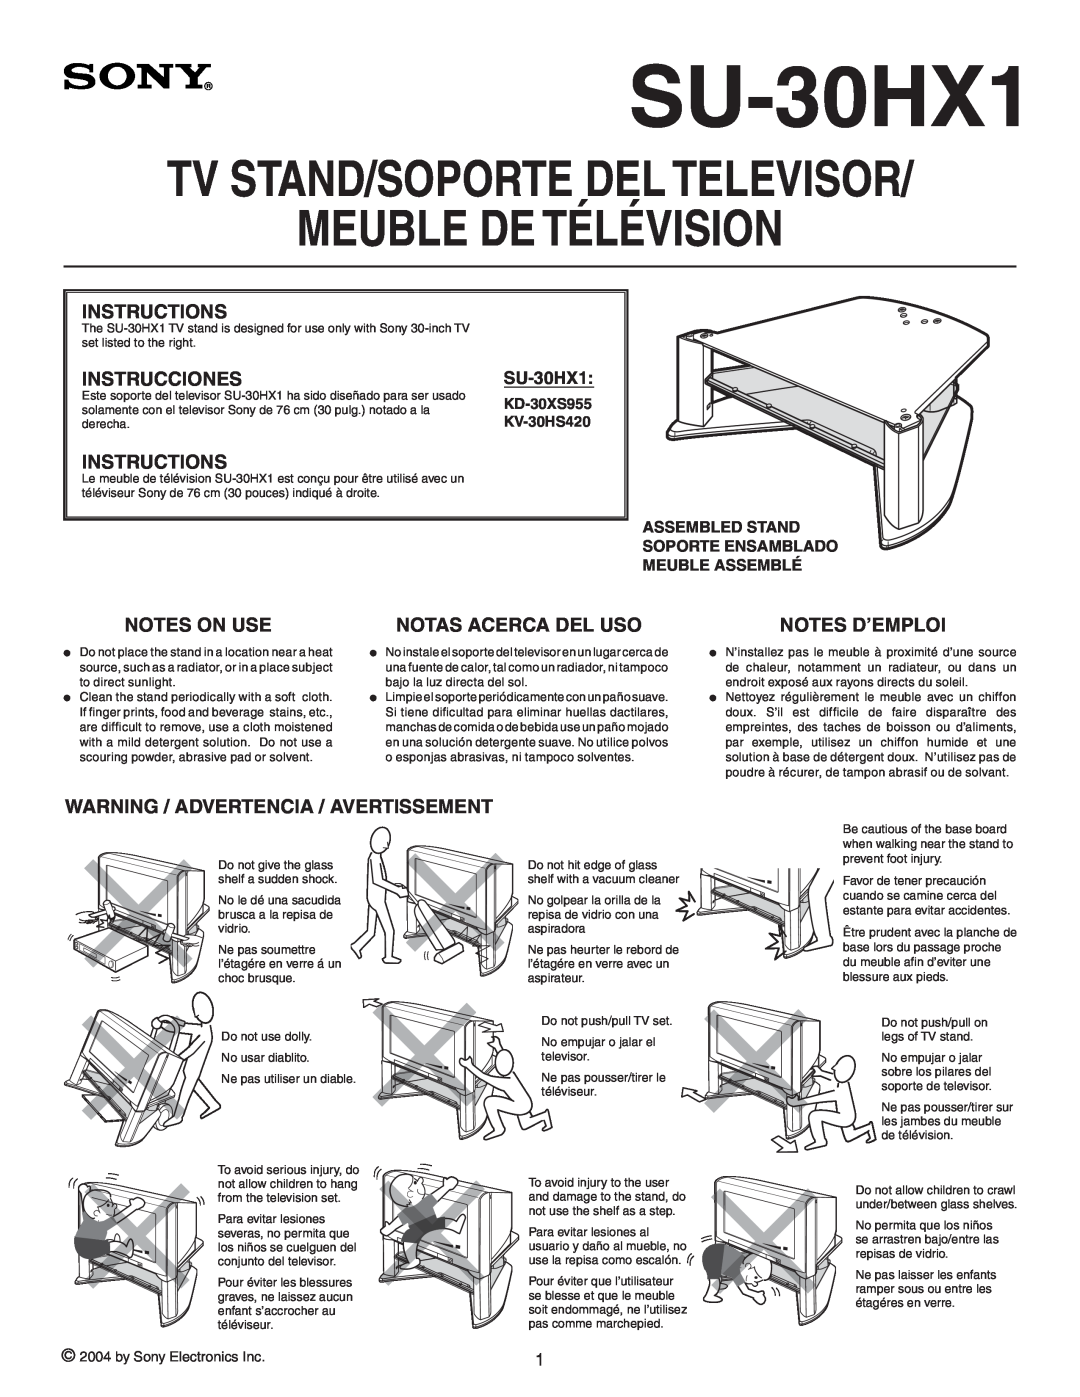 Sony SU-30HX1 manual Meuble De Télévision, Tv Stand/Soporte Del Televisor, Instructions, Instrucciones, Notes On Use 